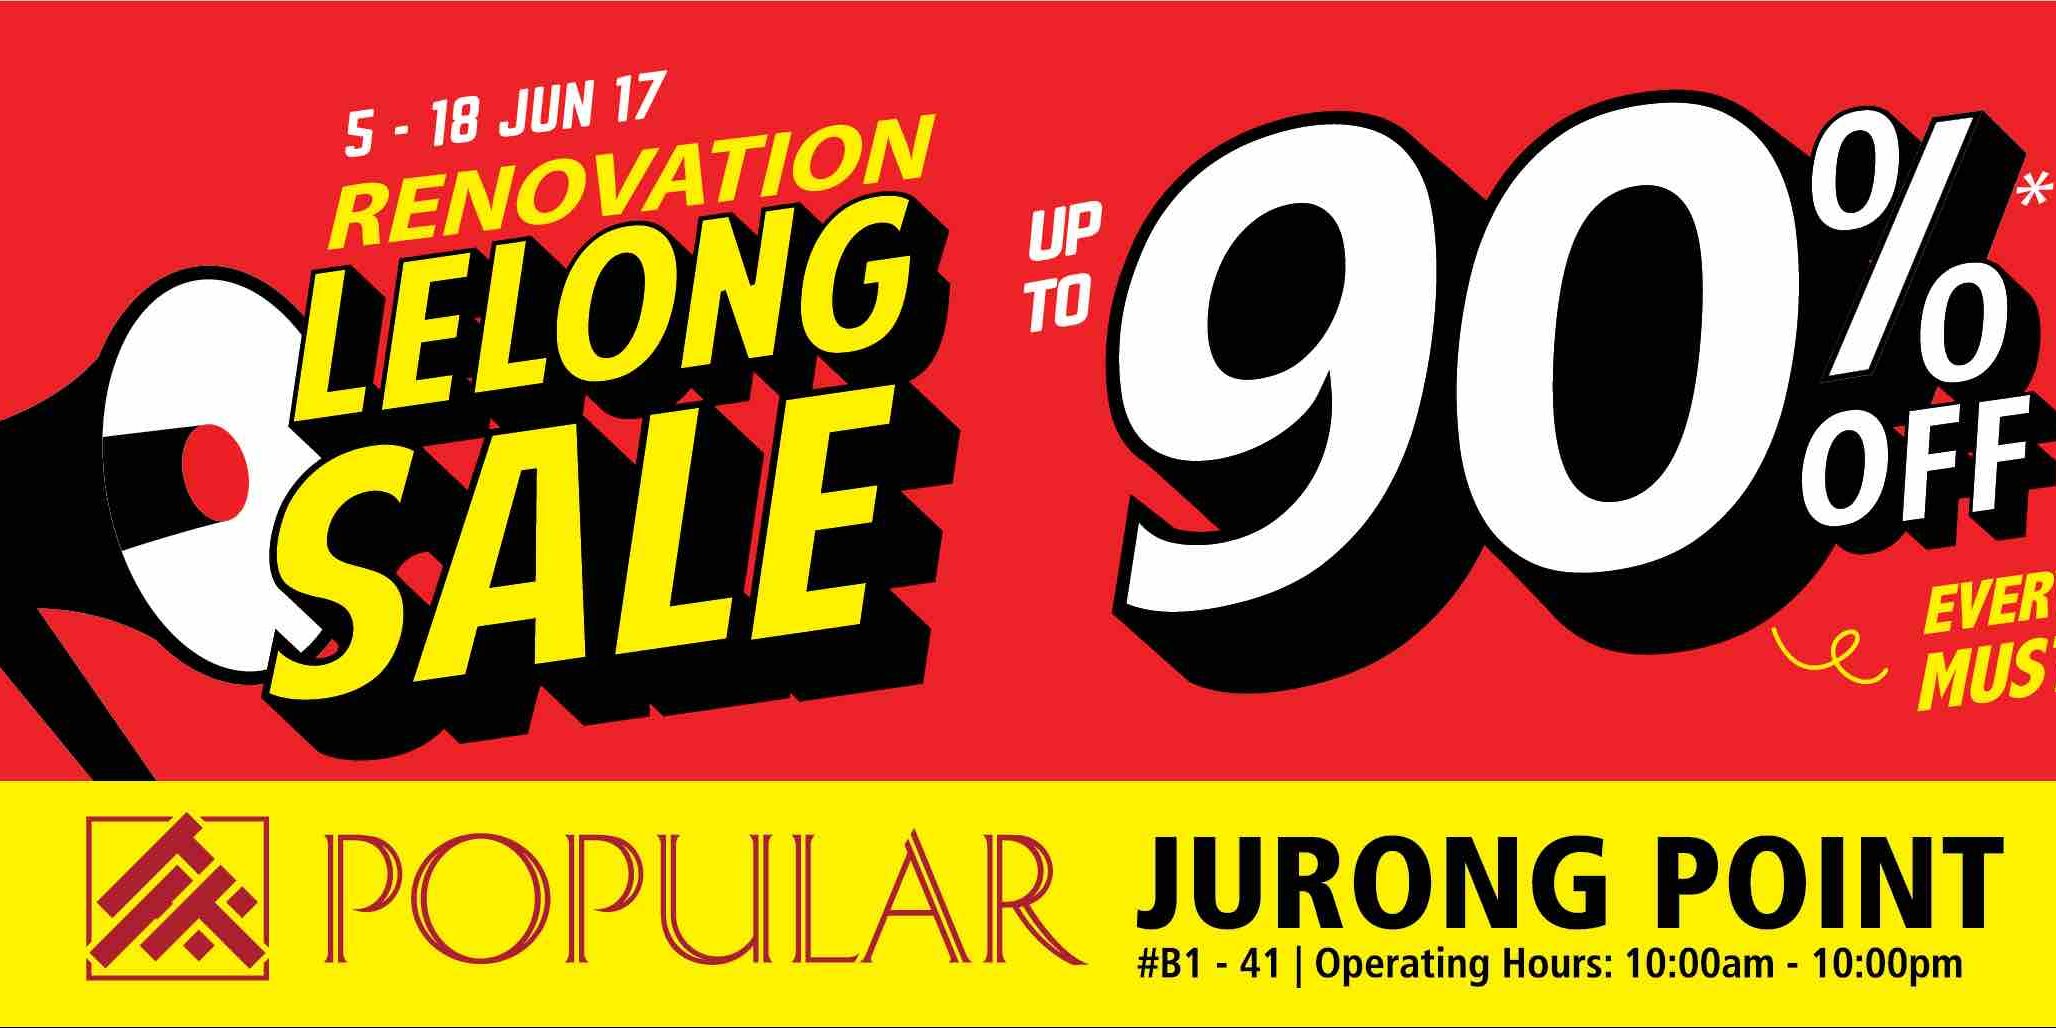 Popular SG Jurong Point Renovation Lelong Sale Up to 90% Off Promotion 5-18 Jun 2017